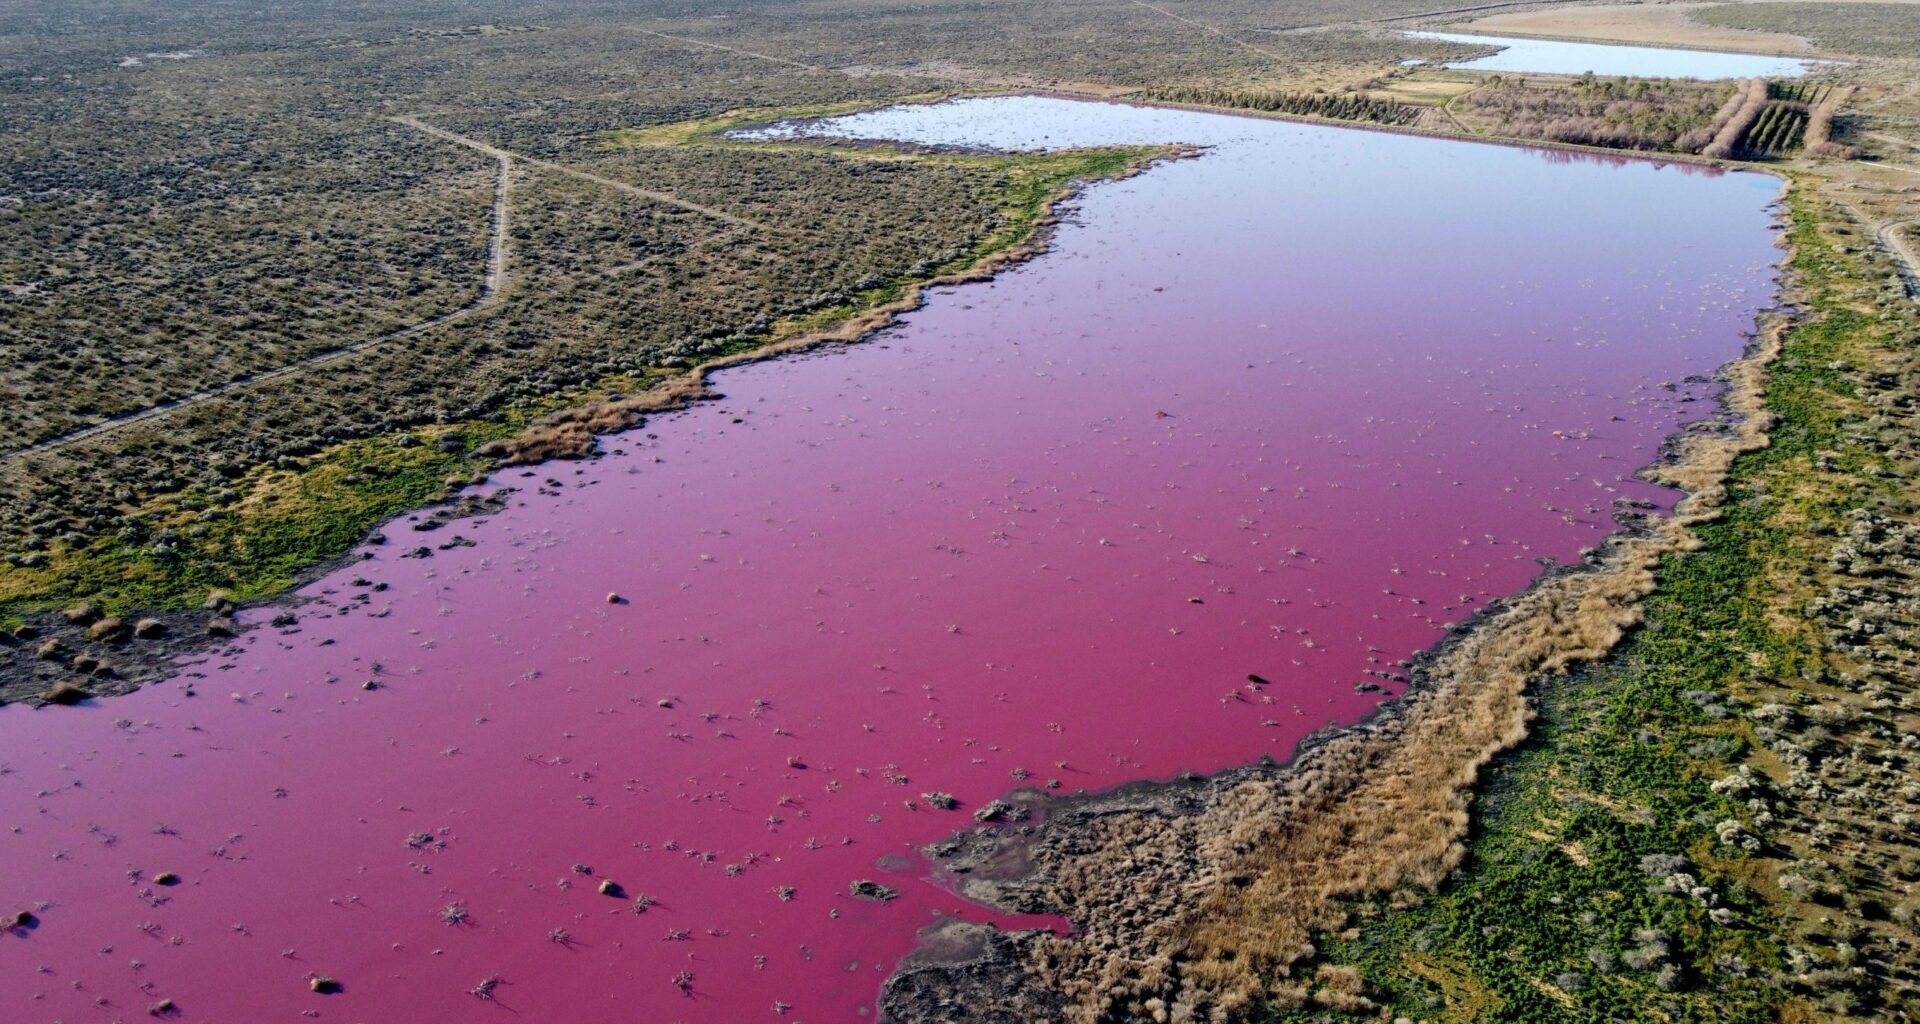 Laguna En Argentina Se Vuelve Rosa Por Químicos Contaminantes